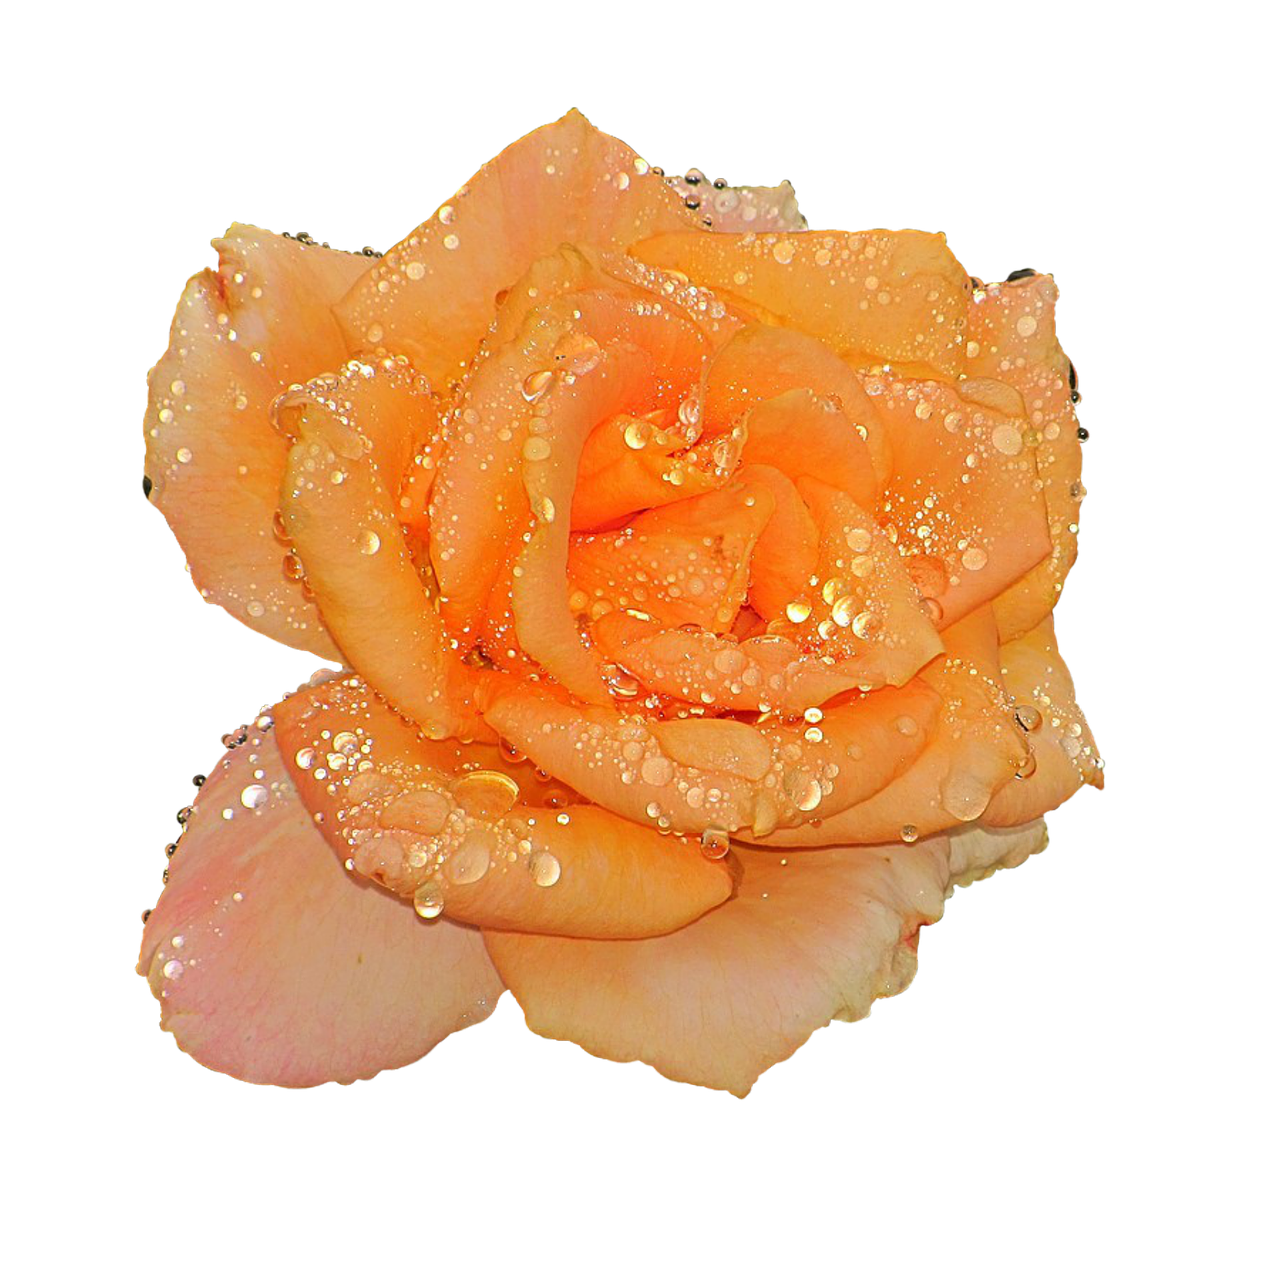 rose drops of water full bloom free photo